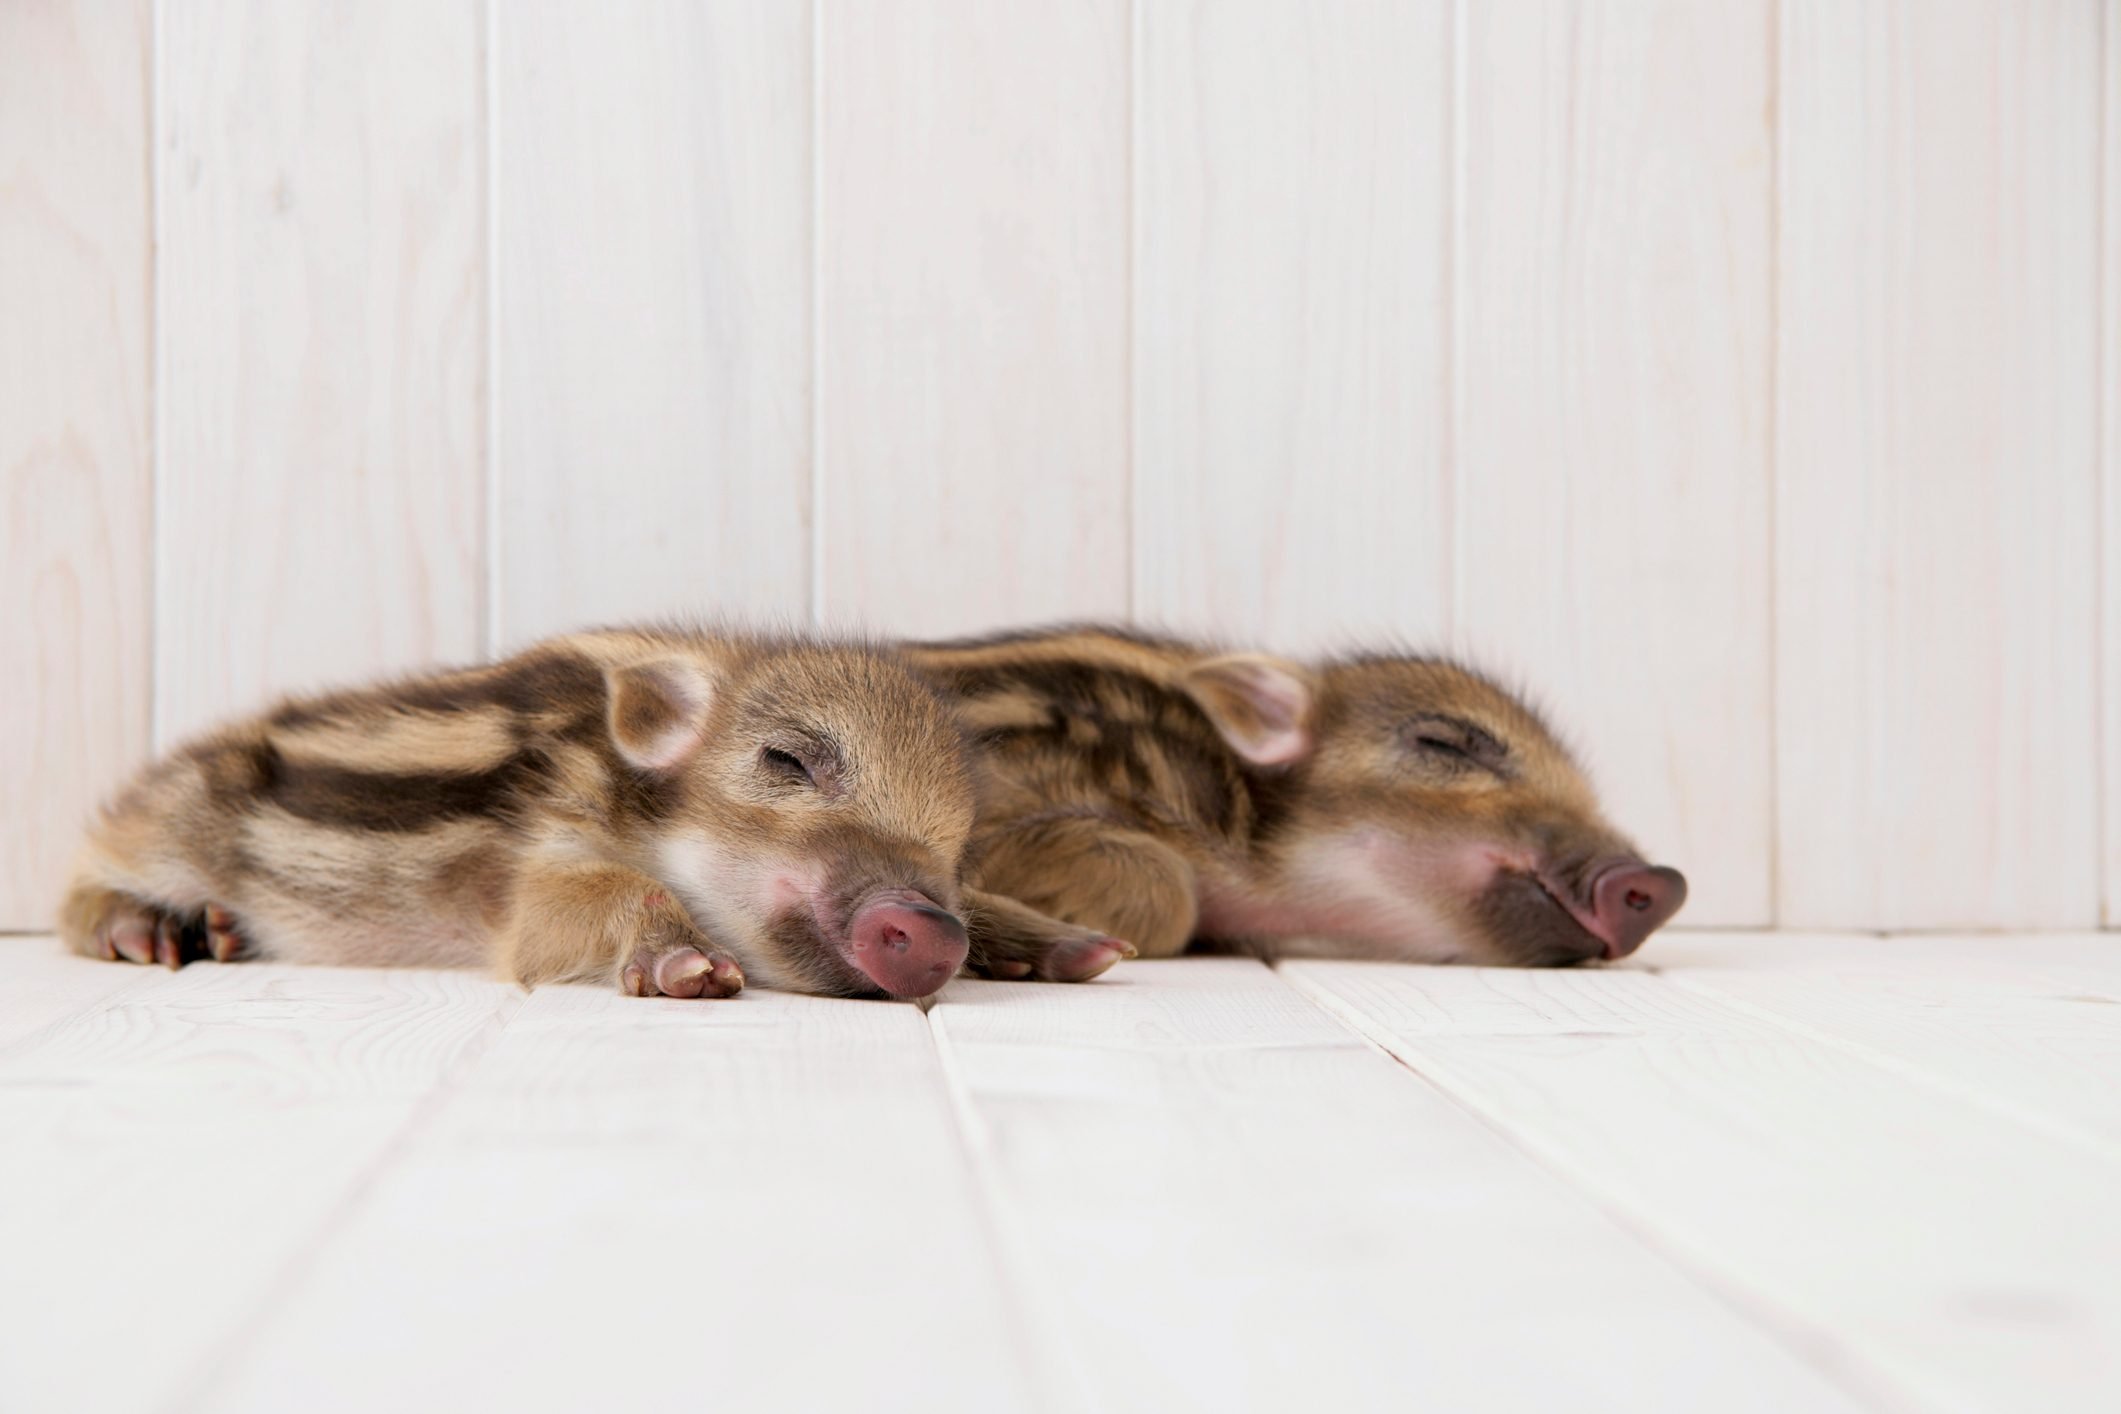 Two baby boars sleeping